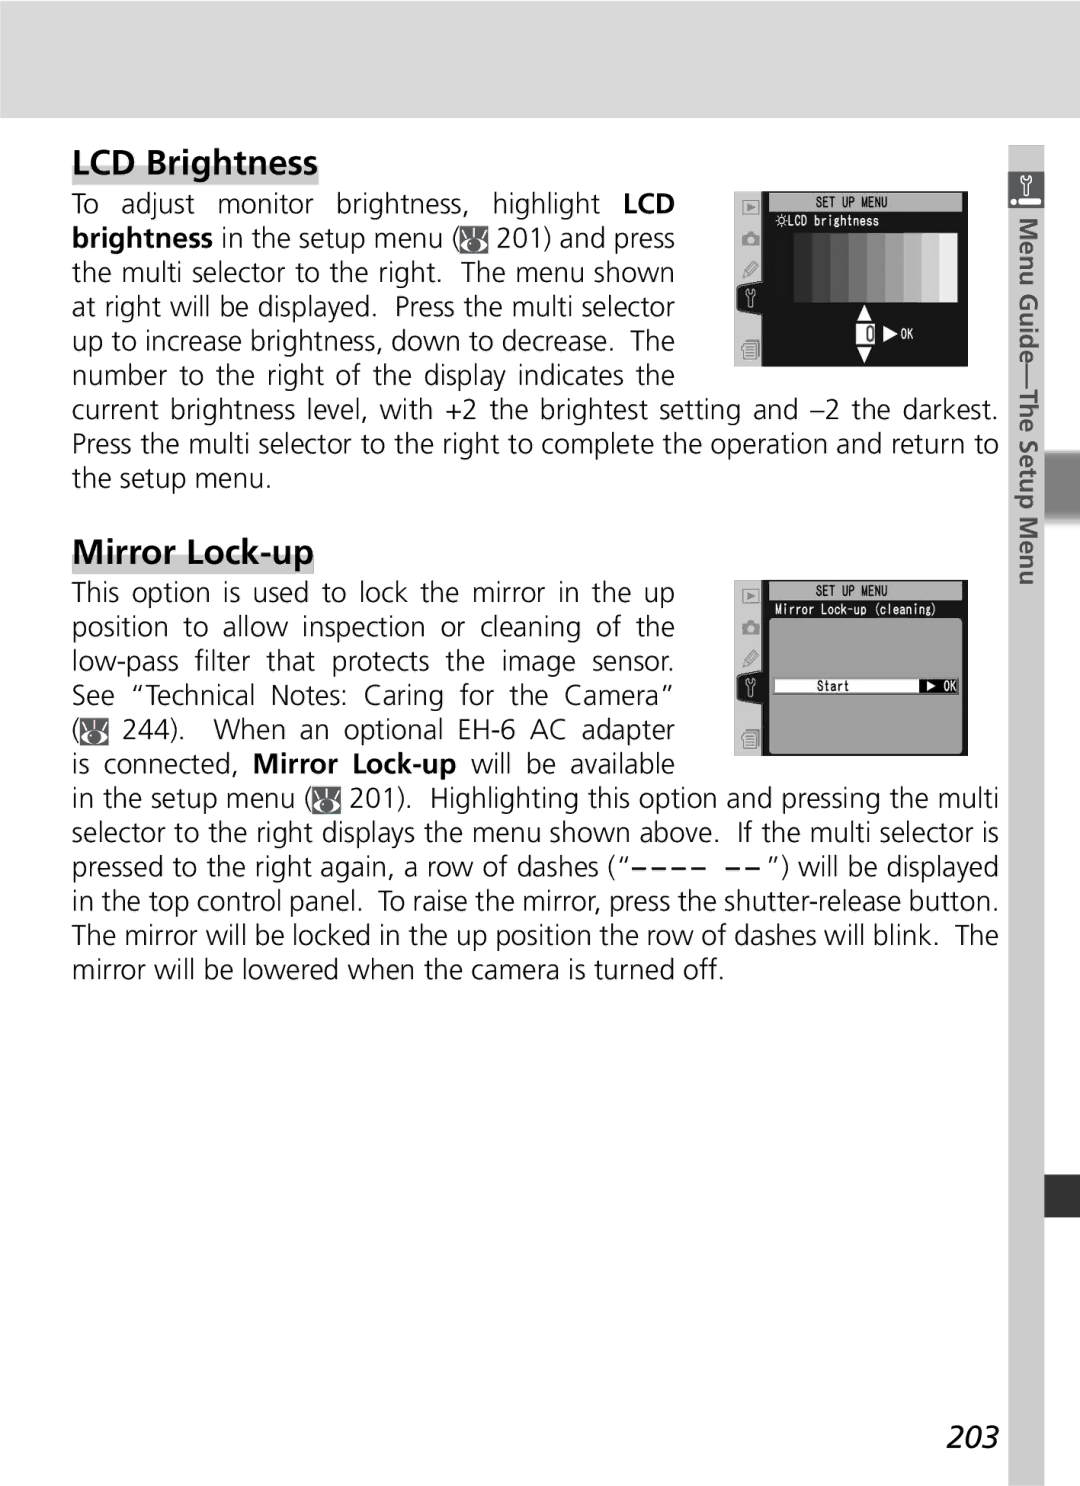 Nikon D2Hs manual LCD Brightness, Mirror Lock-up, 203 